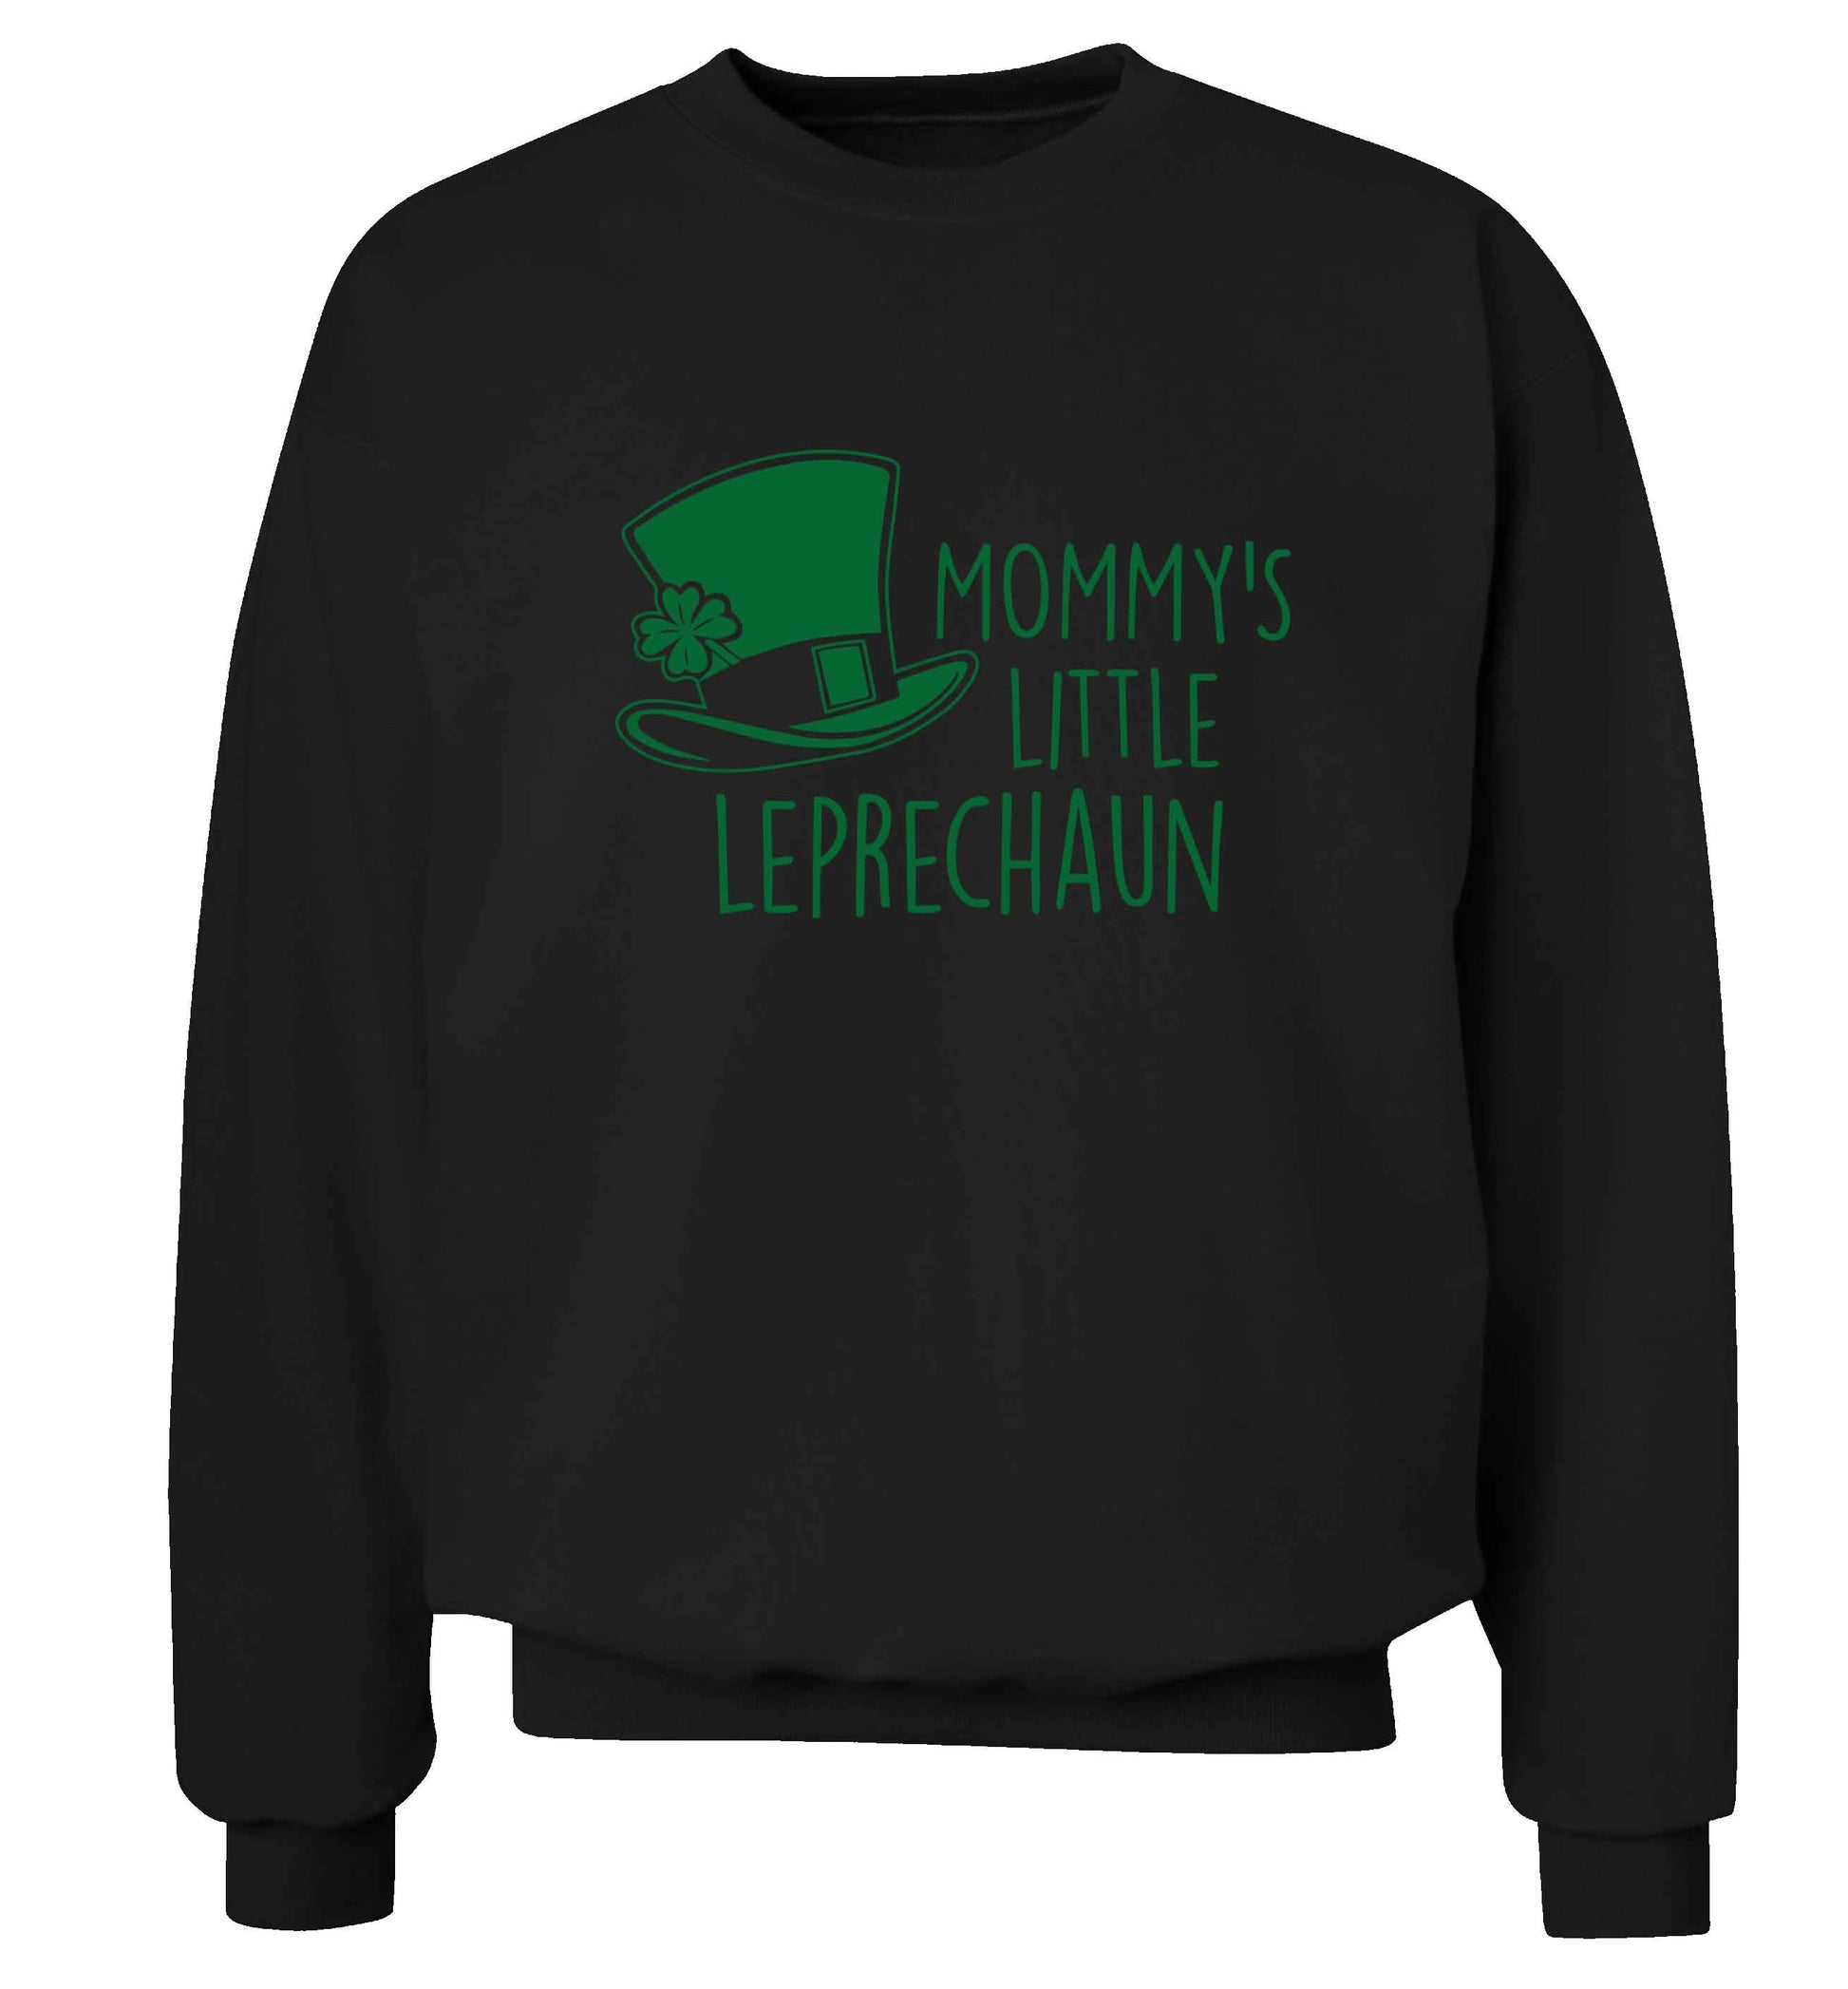 Mommy's little leprechaun adult's unisex black sweater 2XL